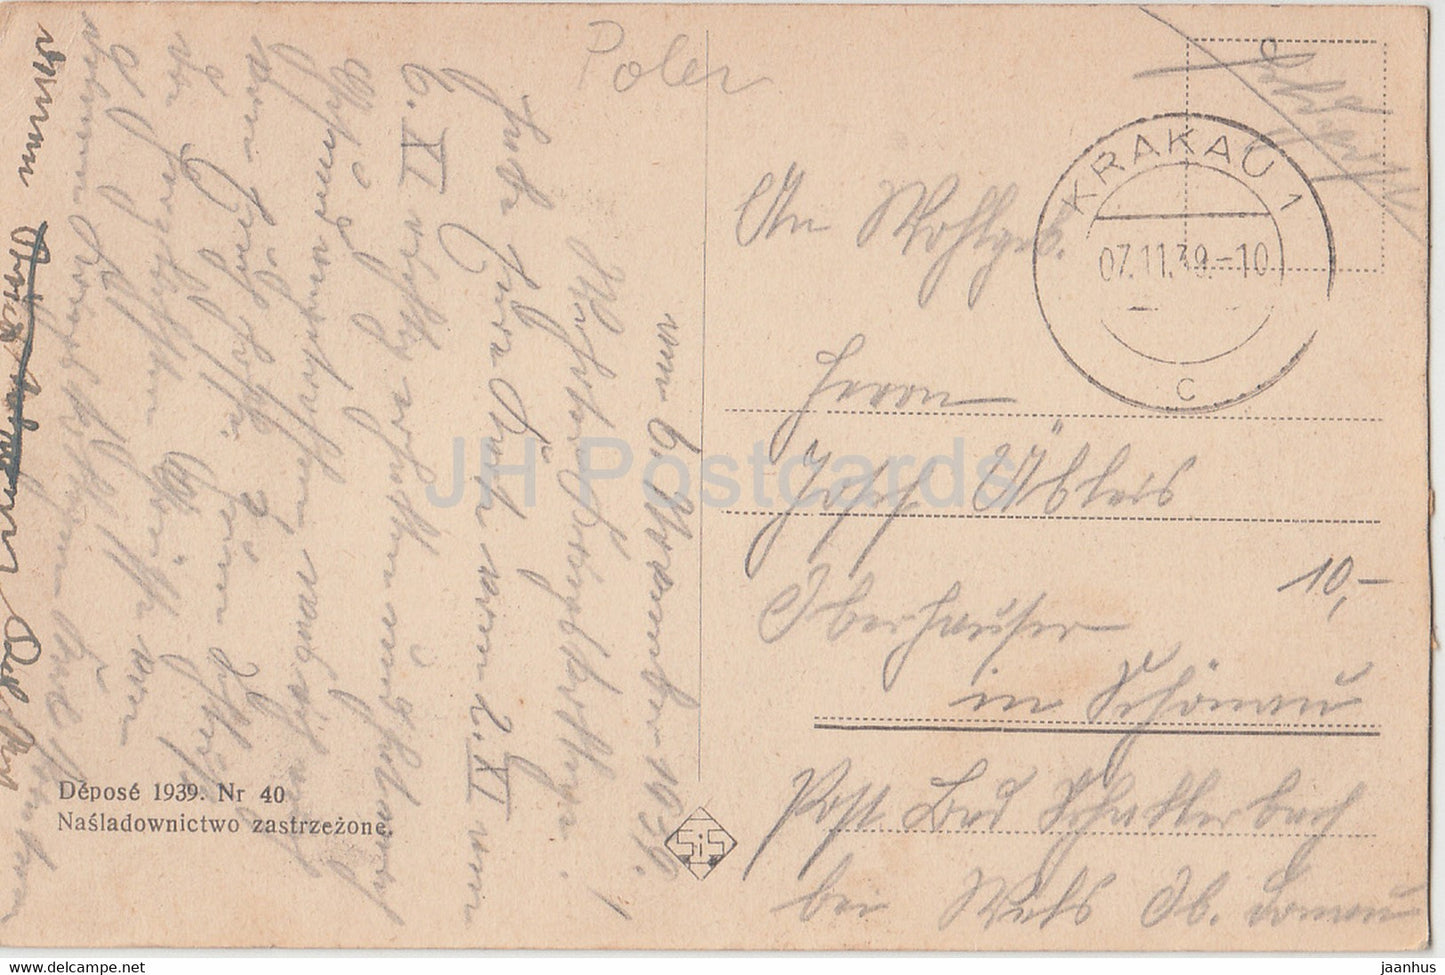 Krakow - Sukiennice - Tuchhaus - Feldpost - old postcard - 1939 - Poland - used